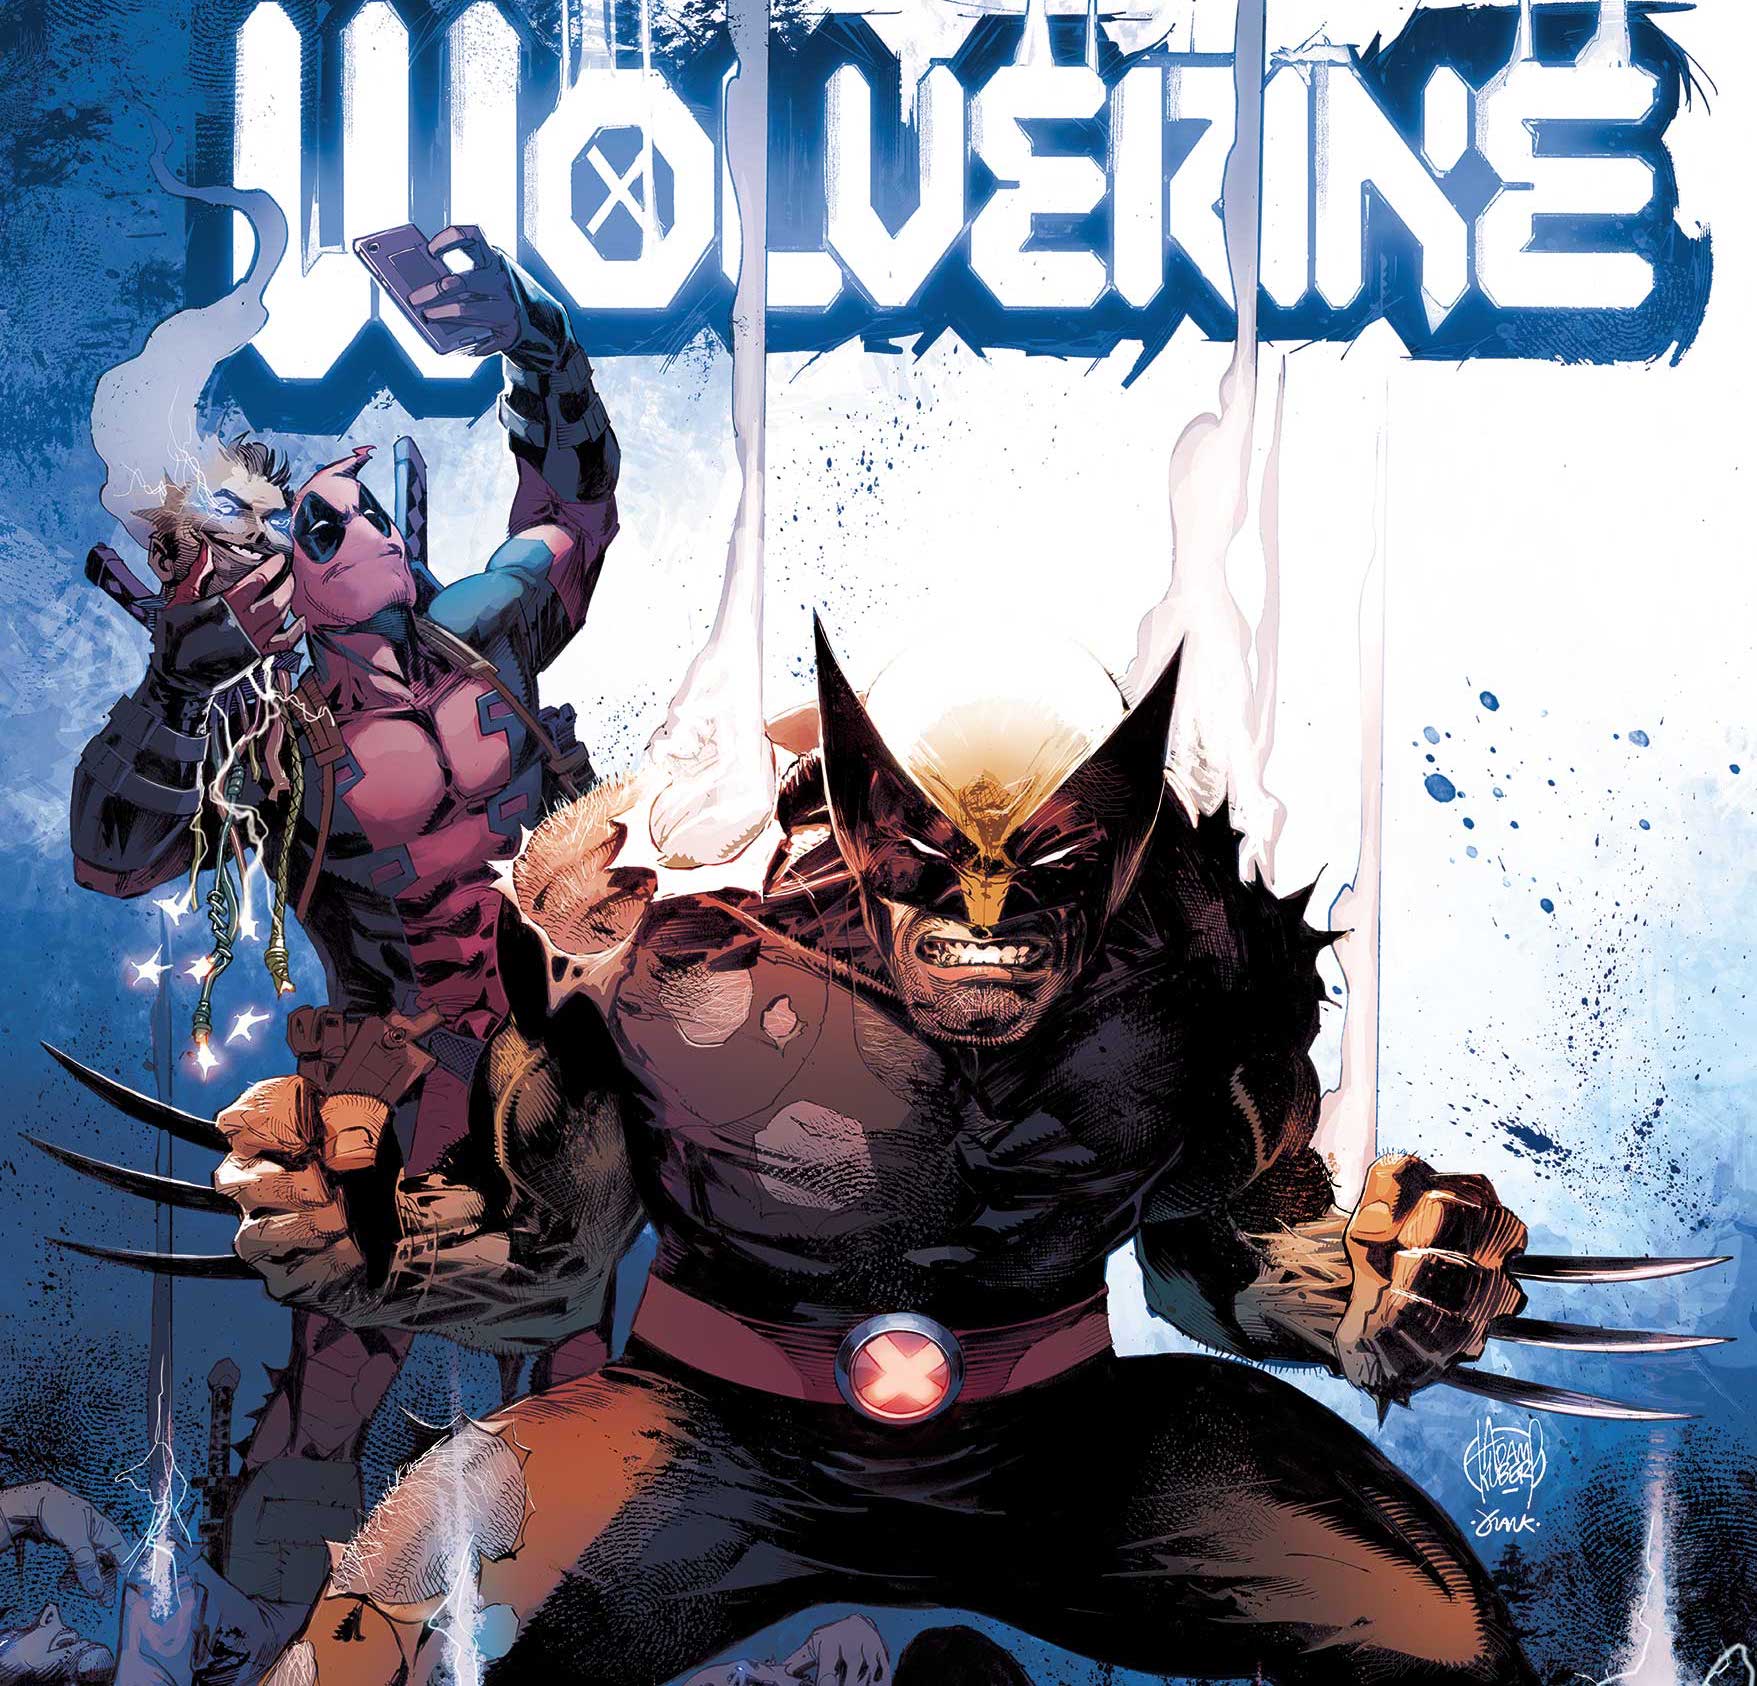 'Wolverine' #20 is a great Deadpool comic